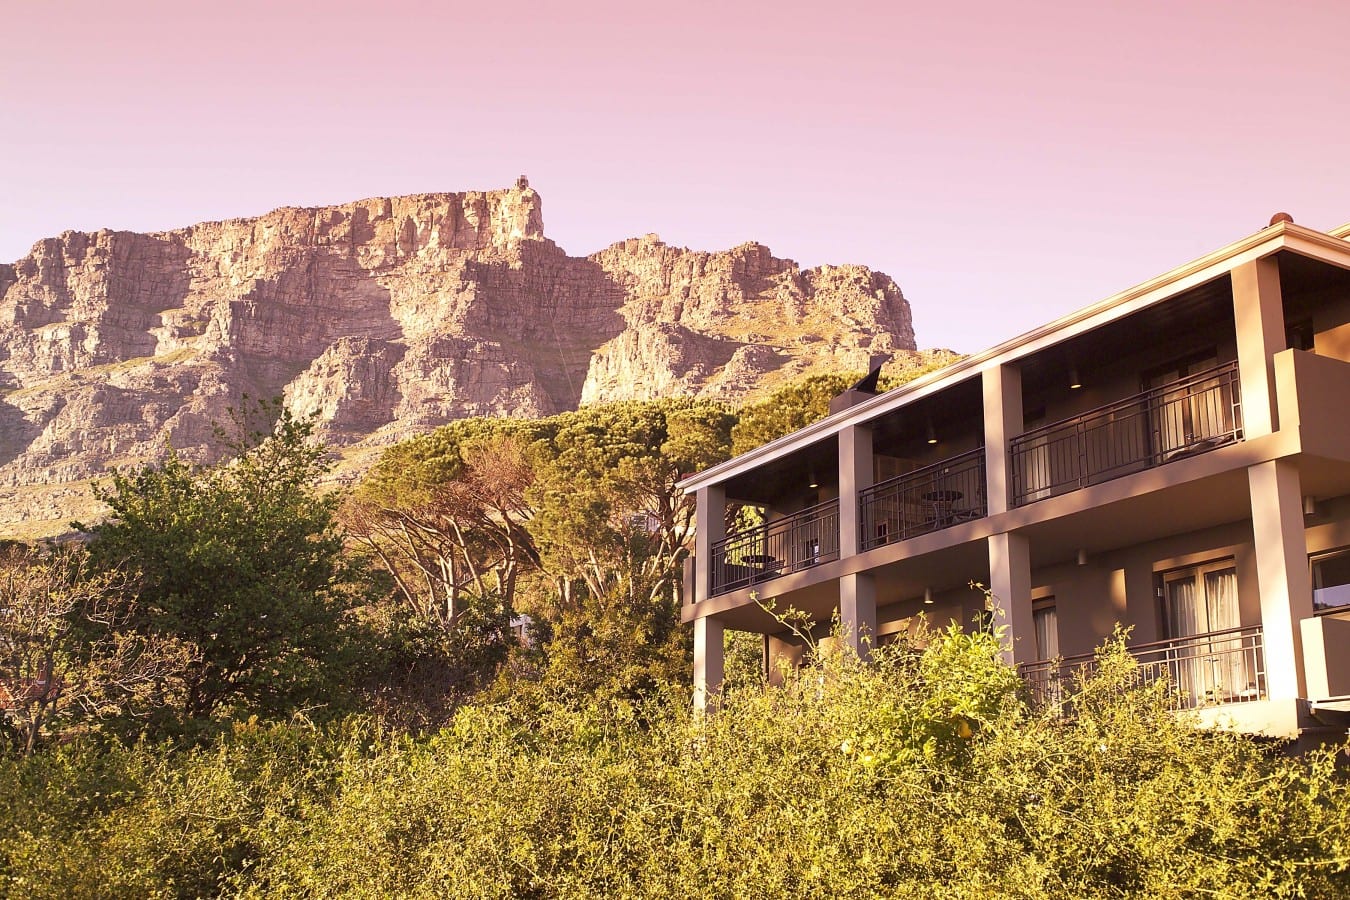 Kensington-Place-mountain-view - Romantic Hotels in Cape Town